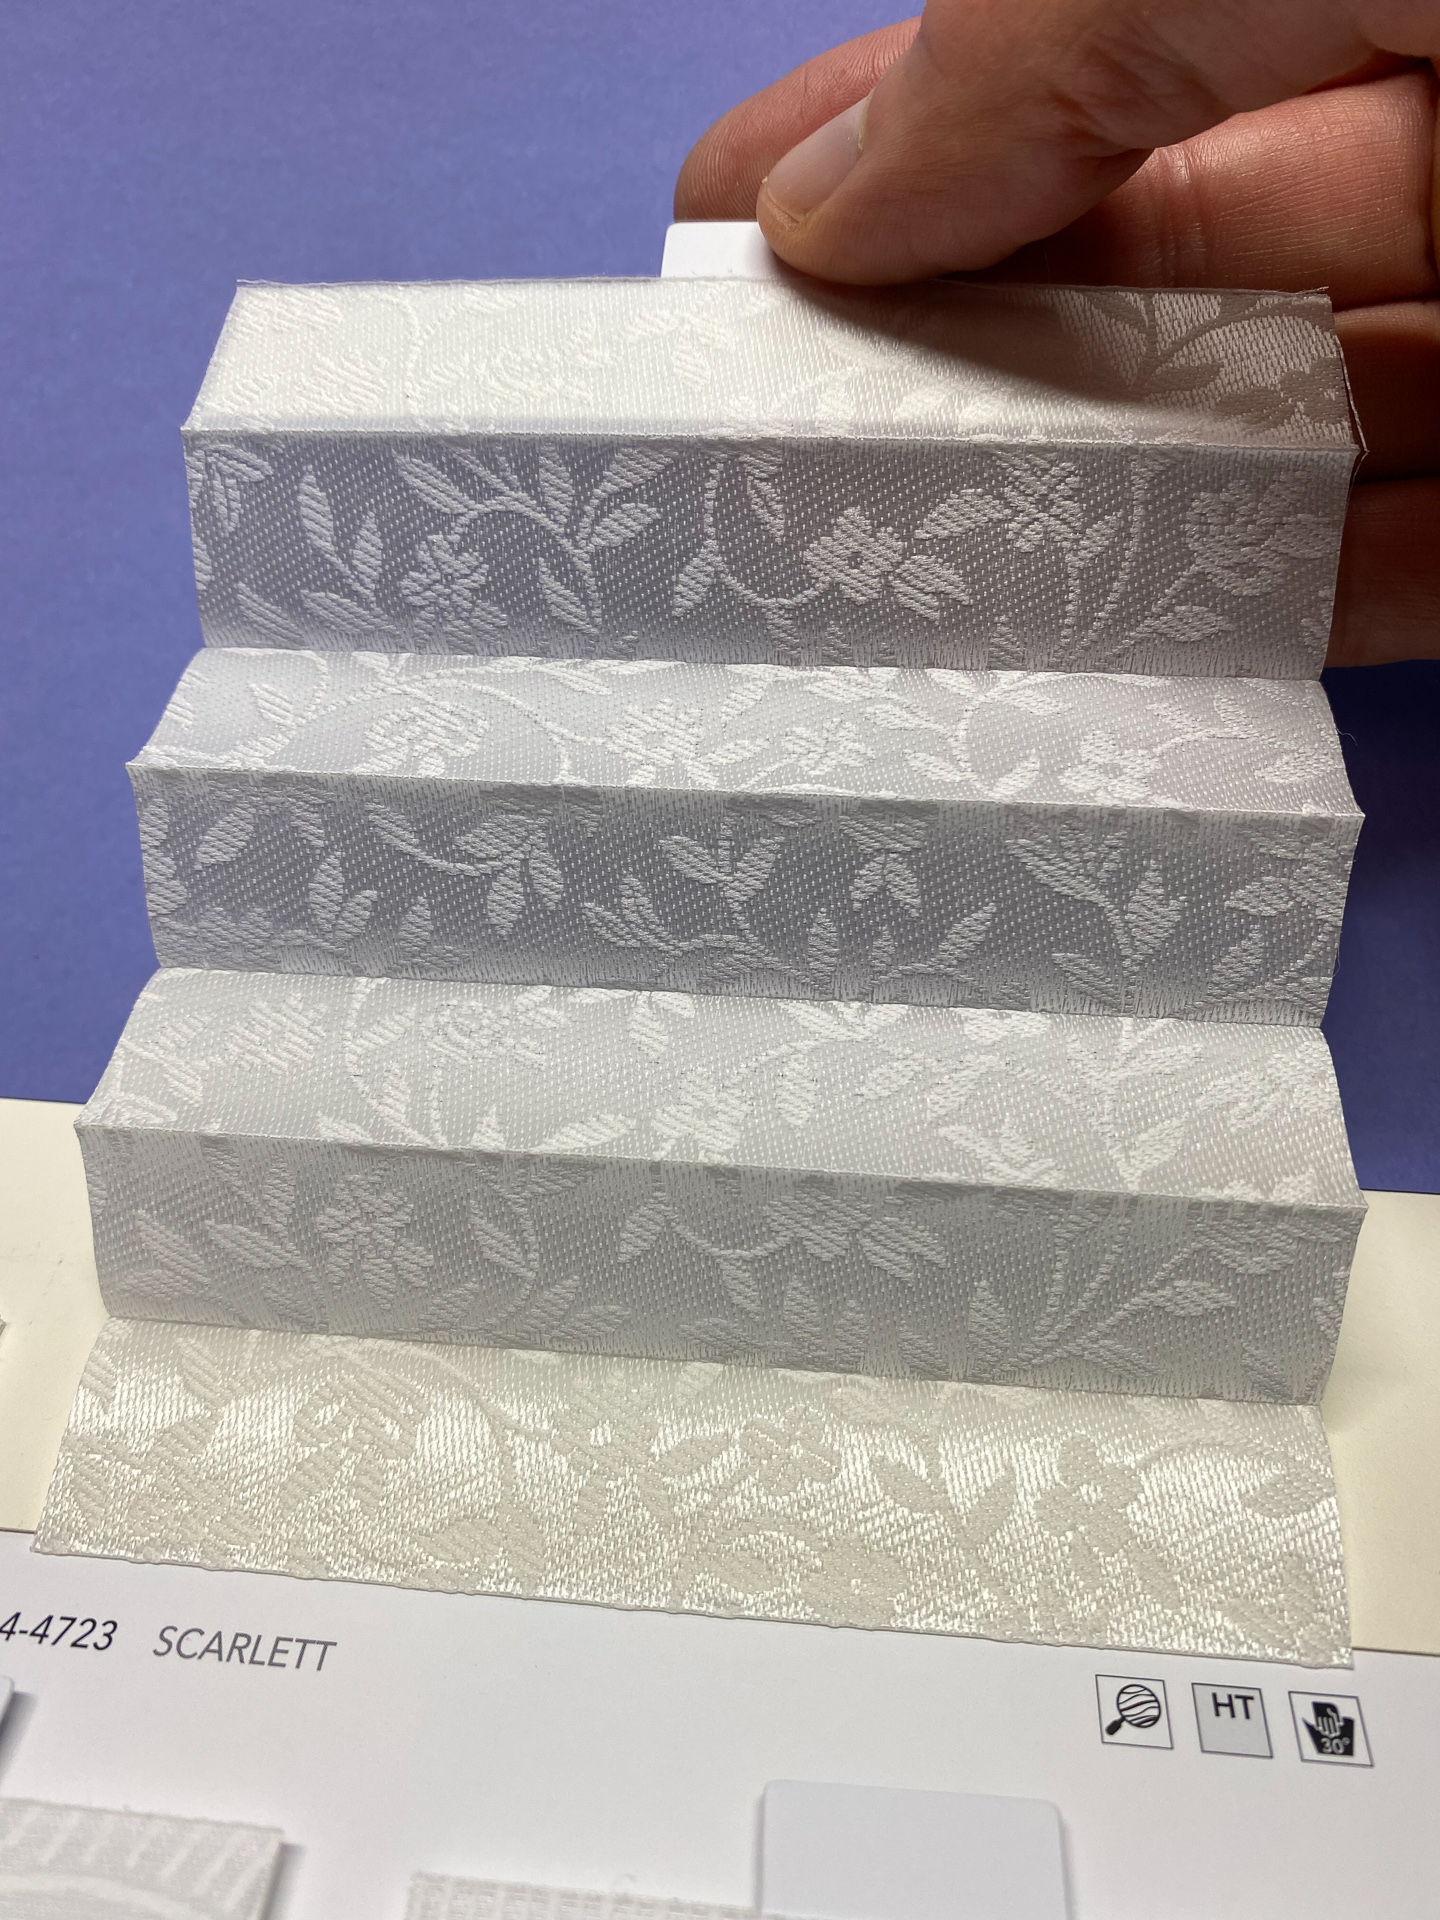 MHZ Plissee Stoff Muster aus der Farbkarte "3 white classics" | Material: 100 % PES